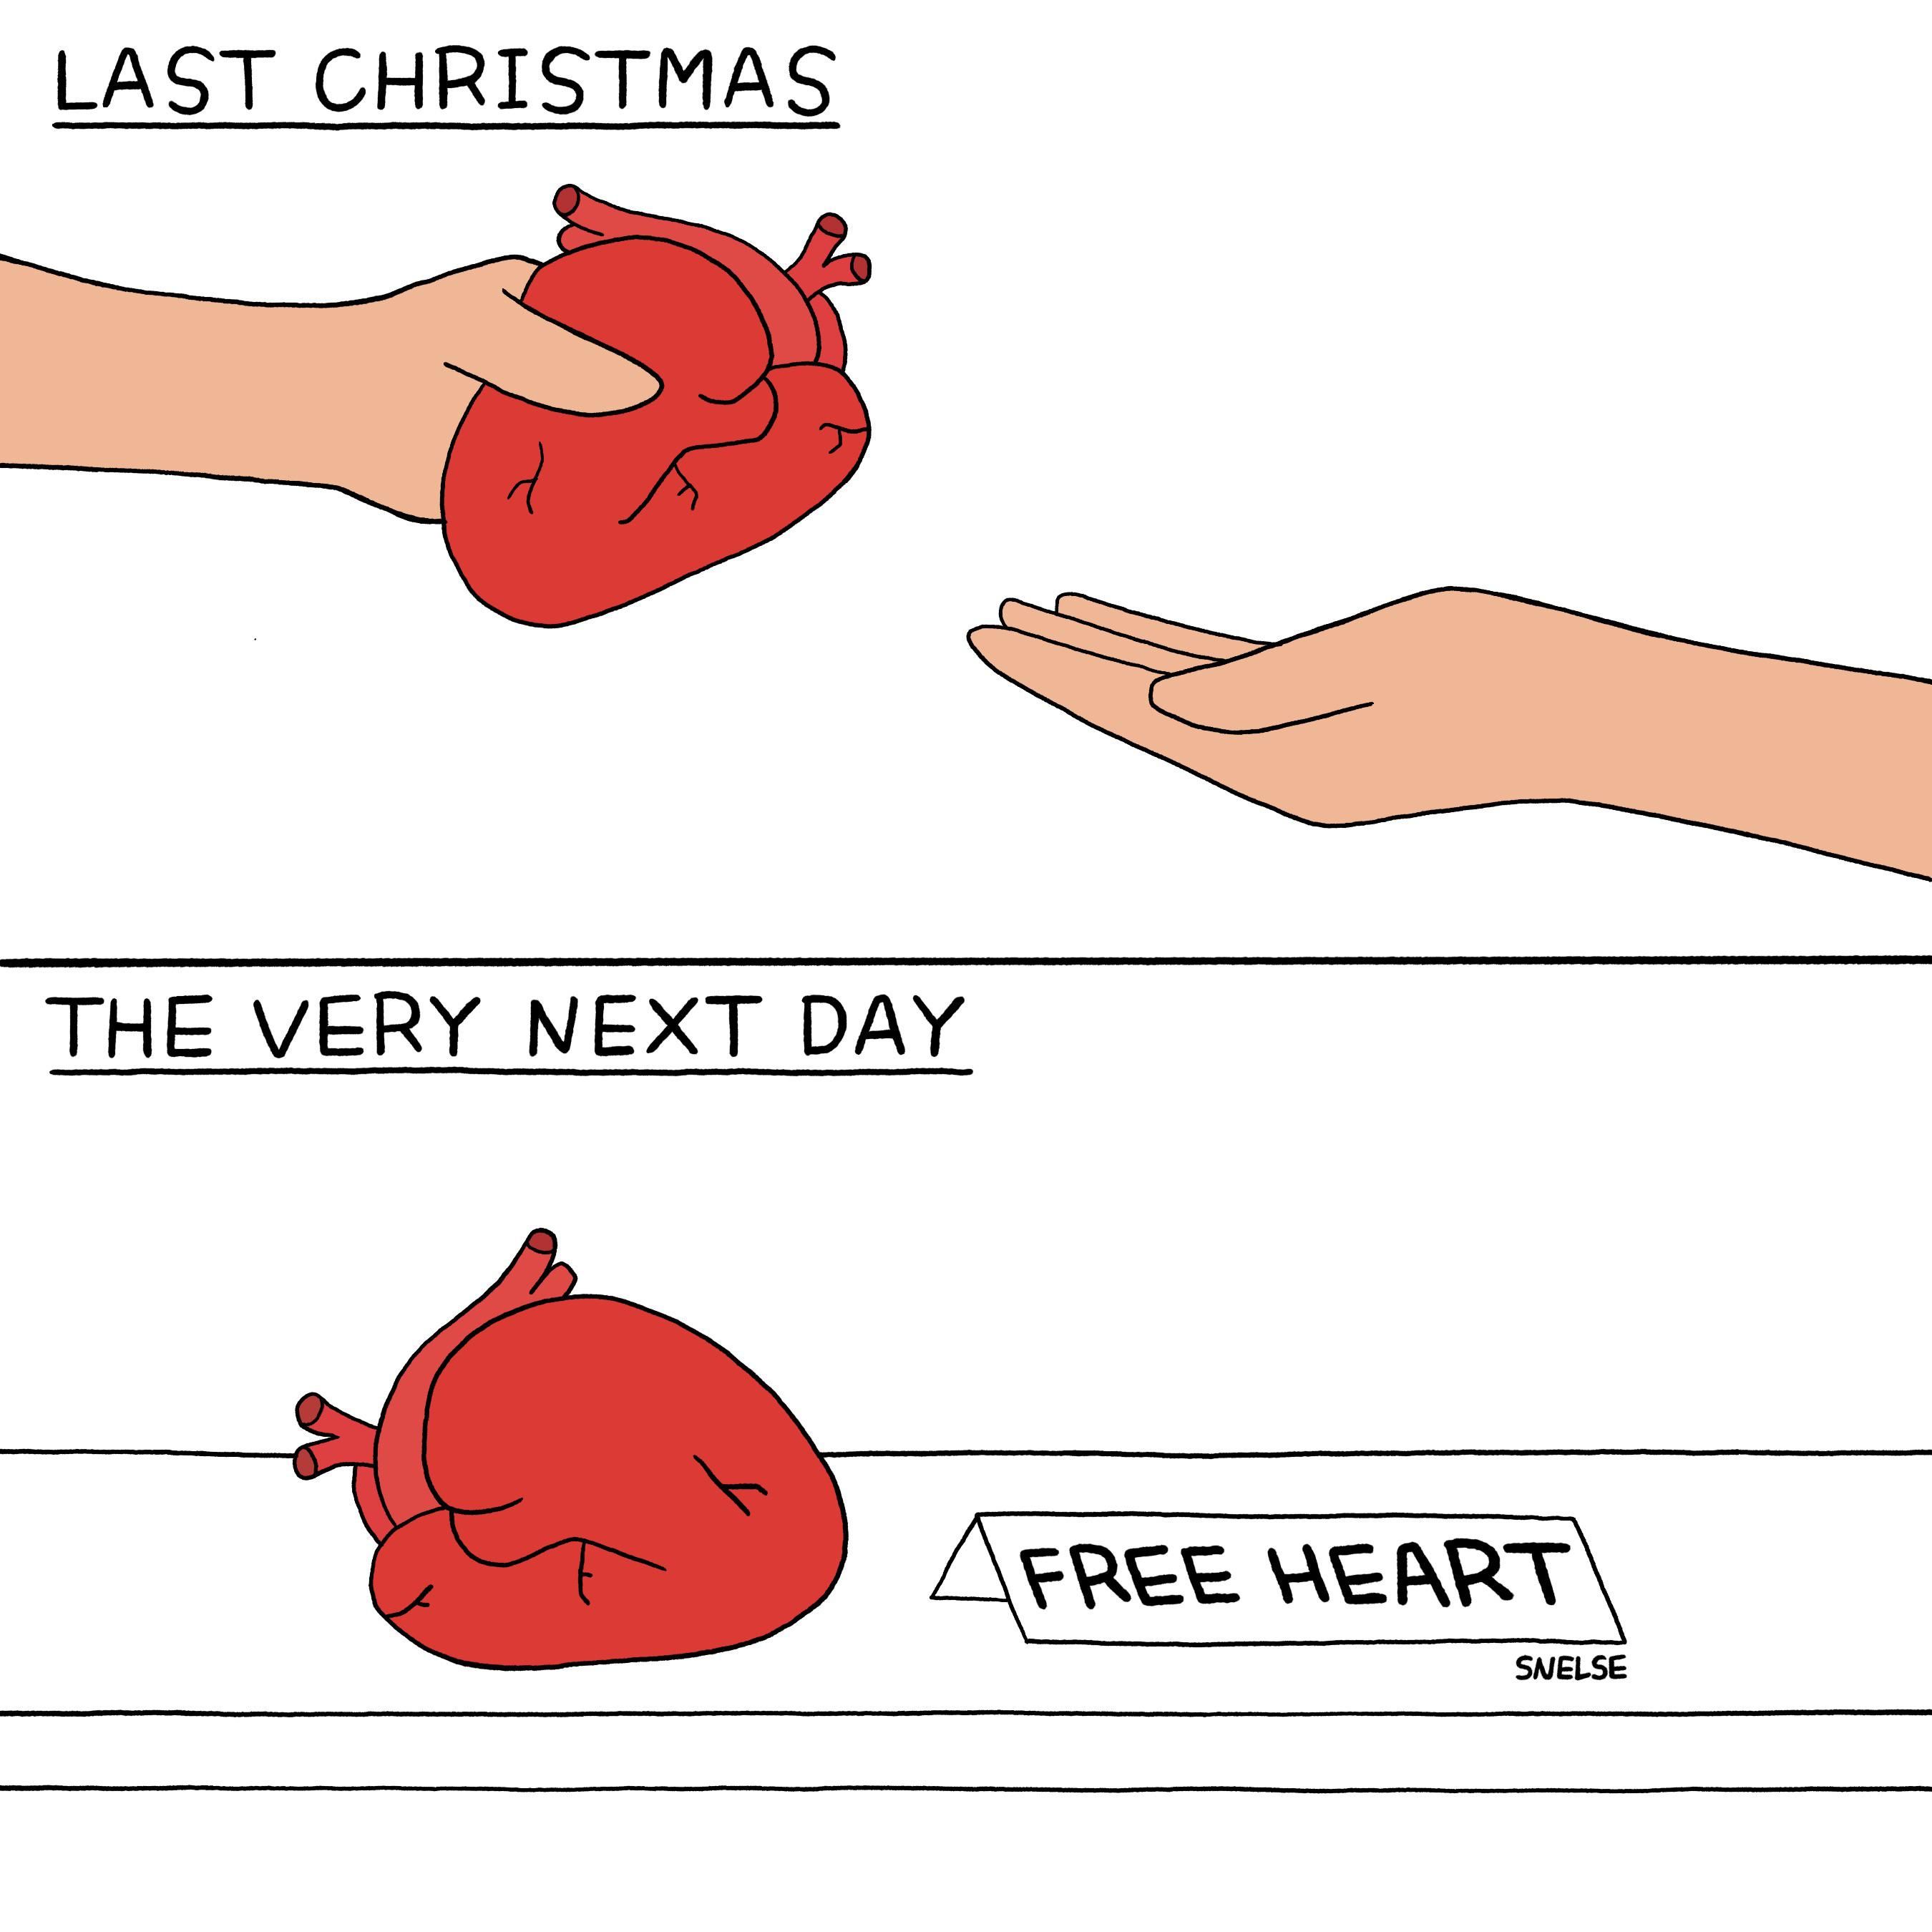 Last Christmas by Steve Nelson